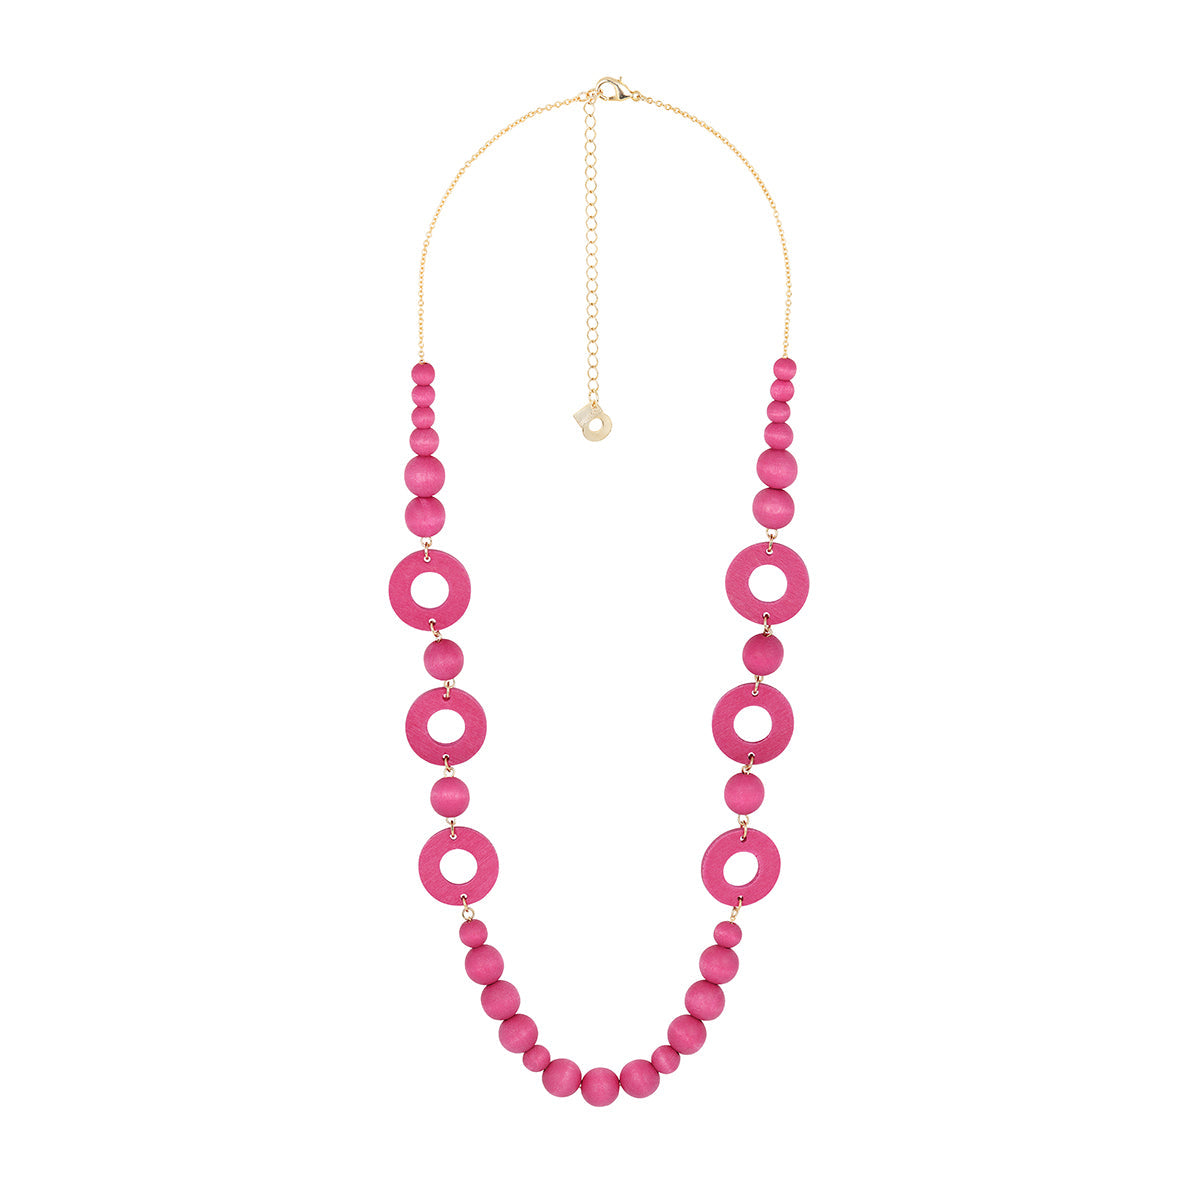 Plumeria necklace, pink